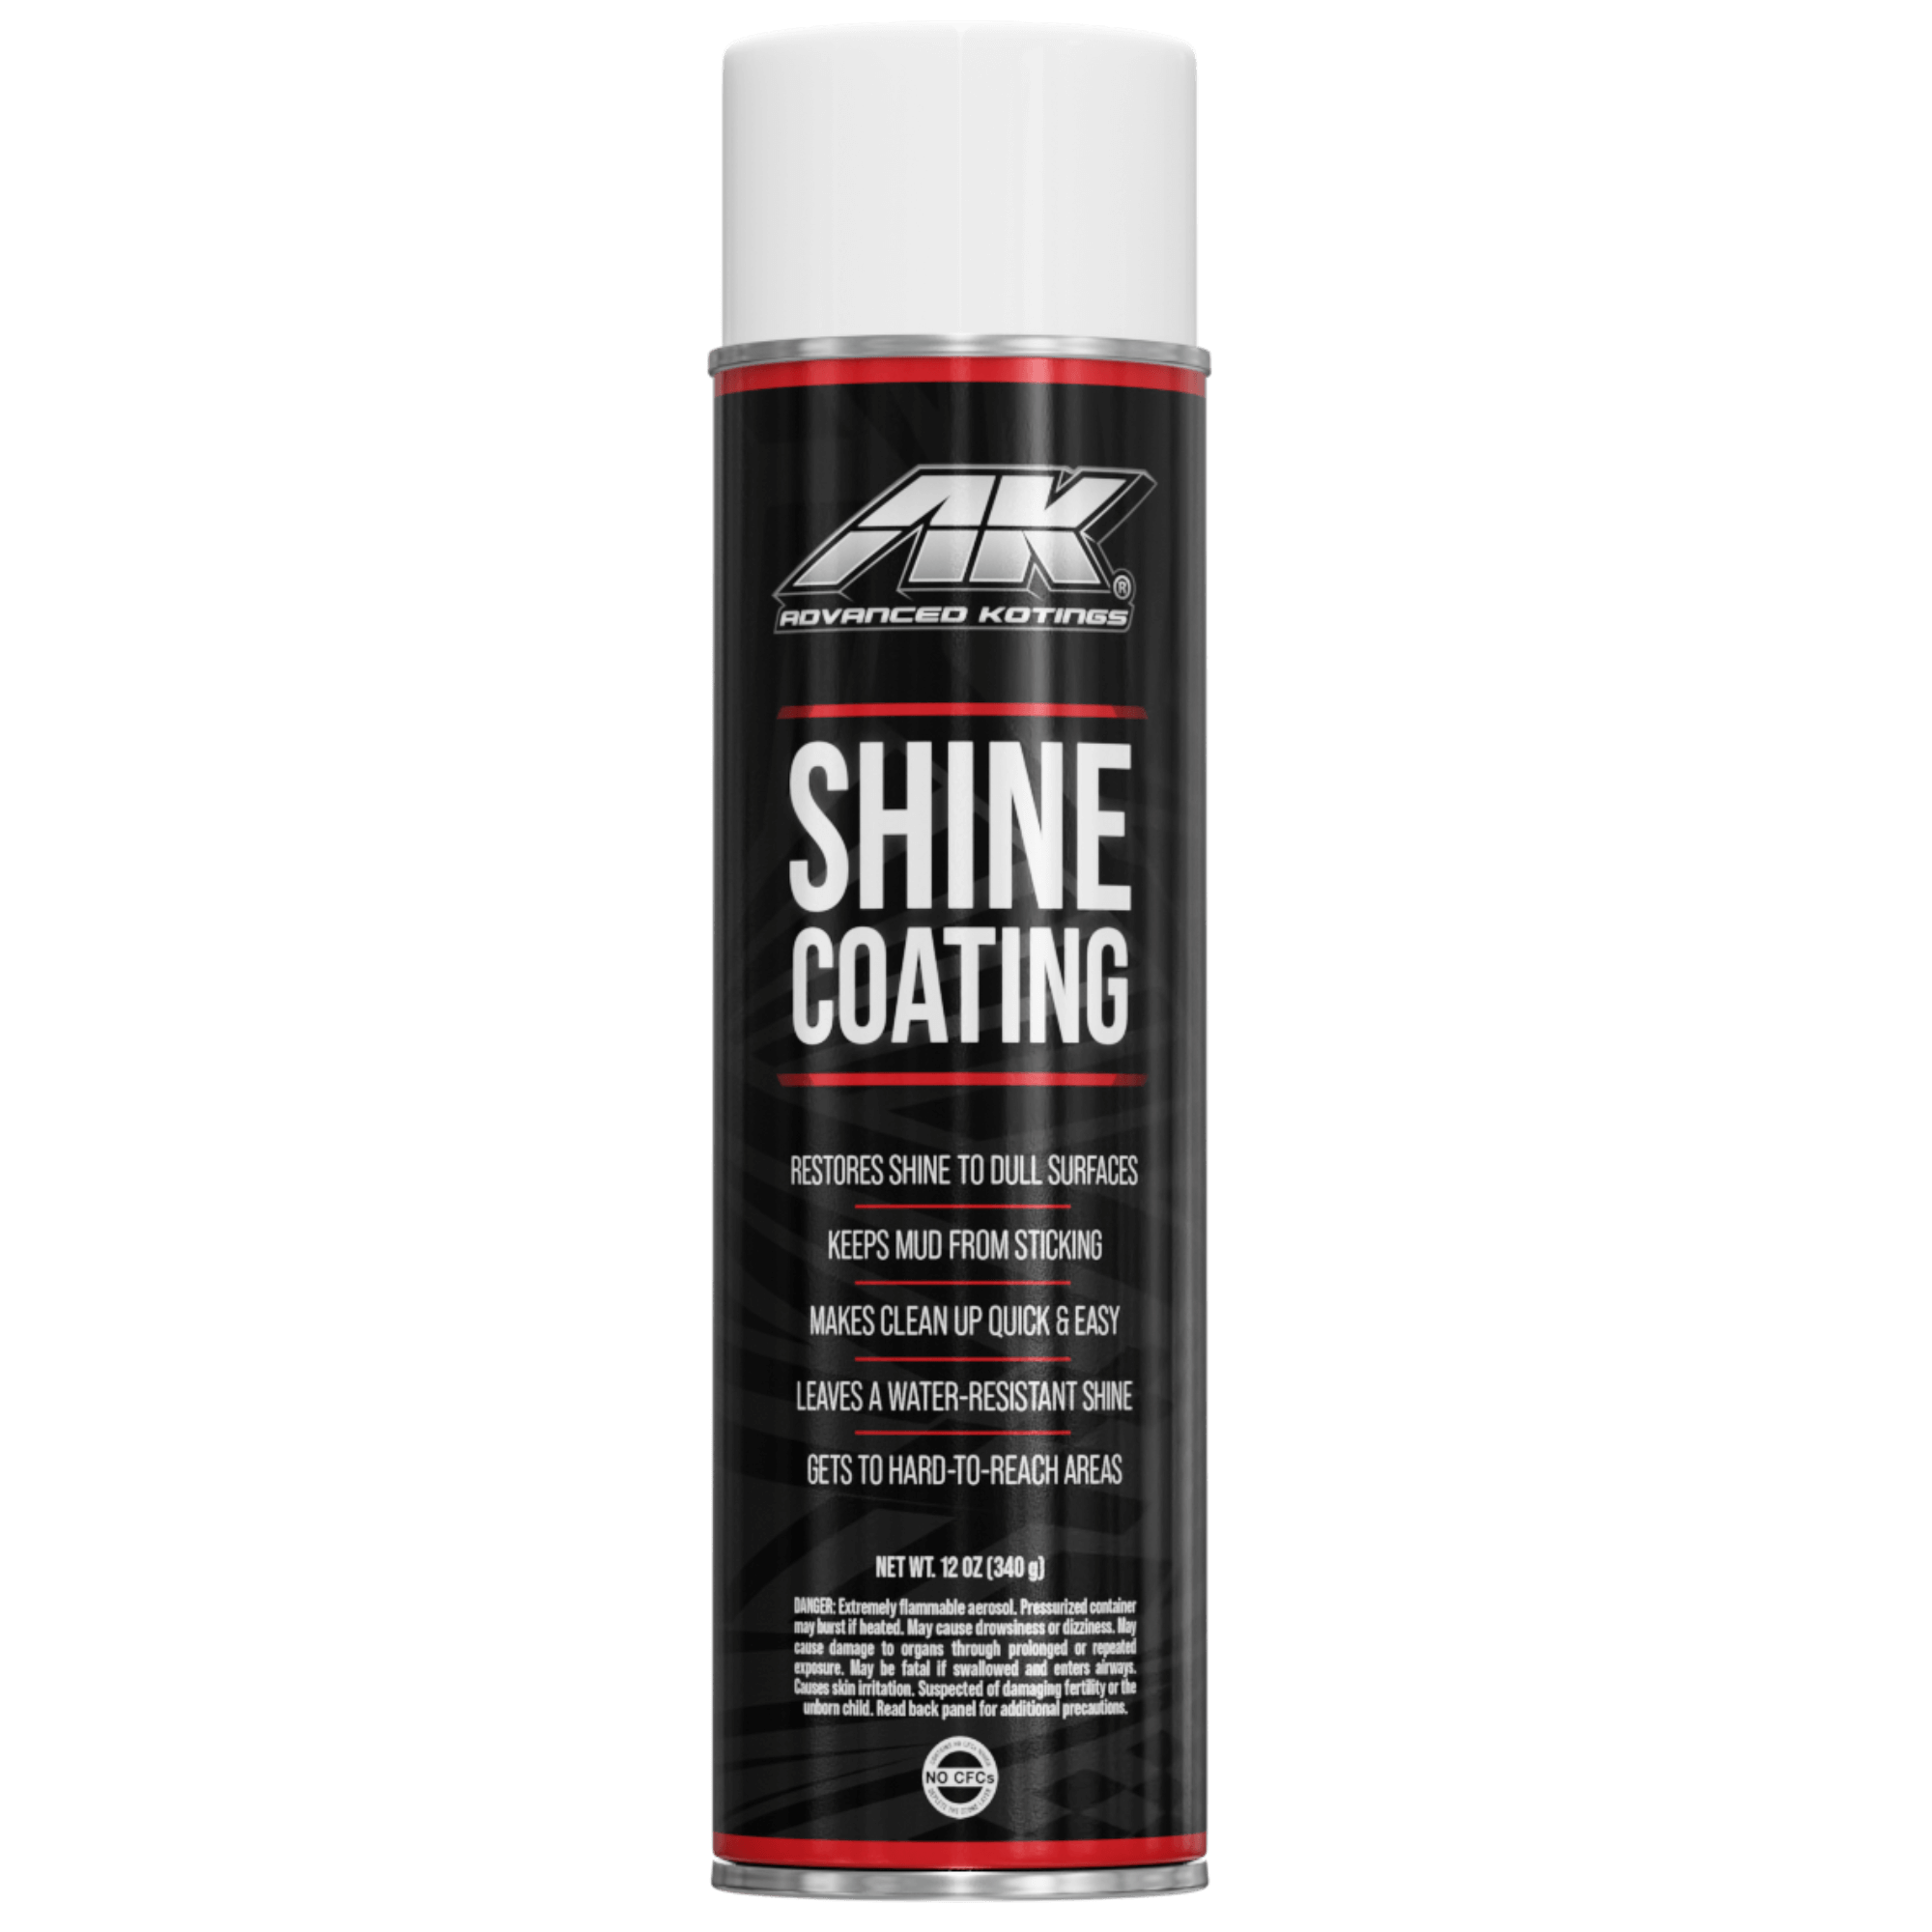 Shine Coating Single can, Advanced Kotings